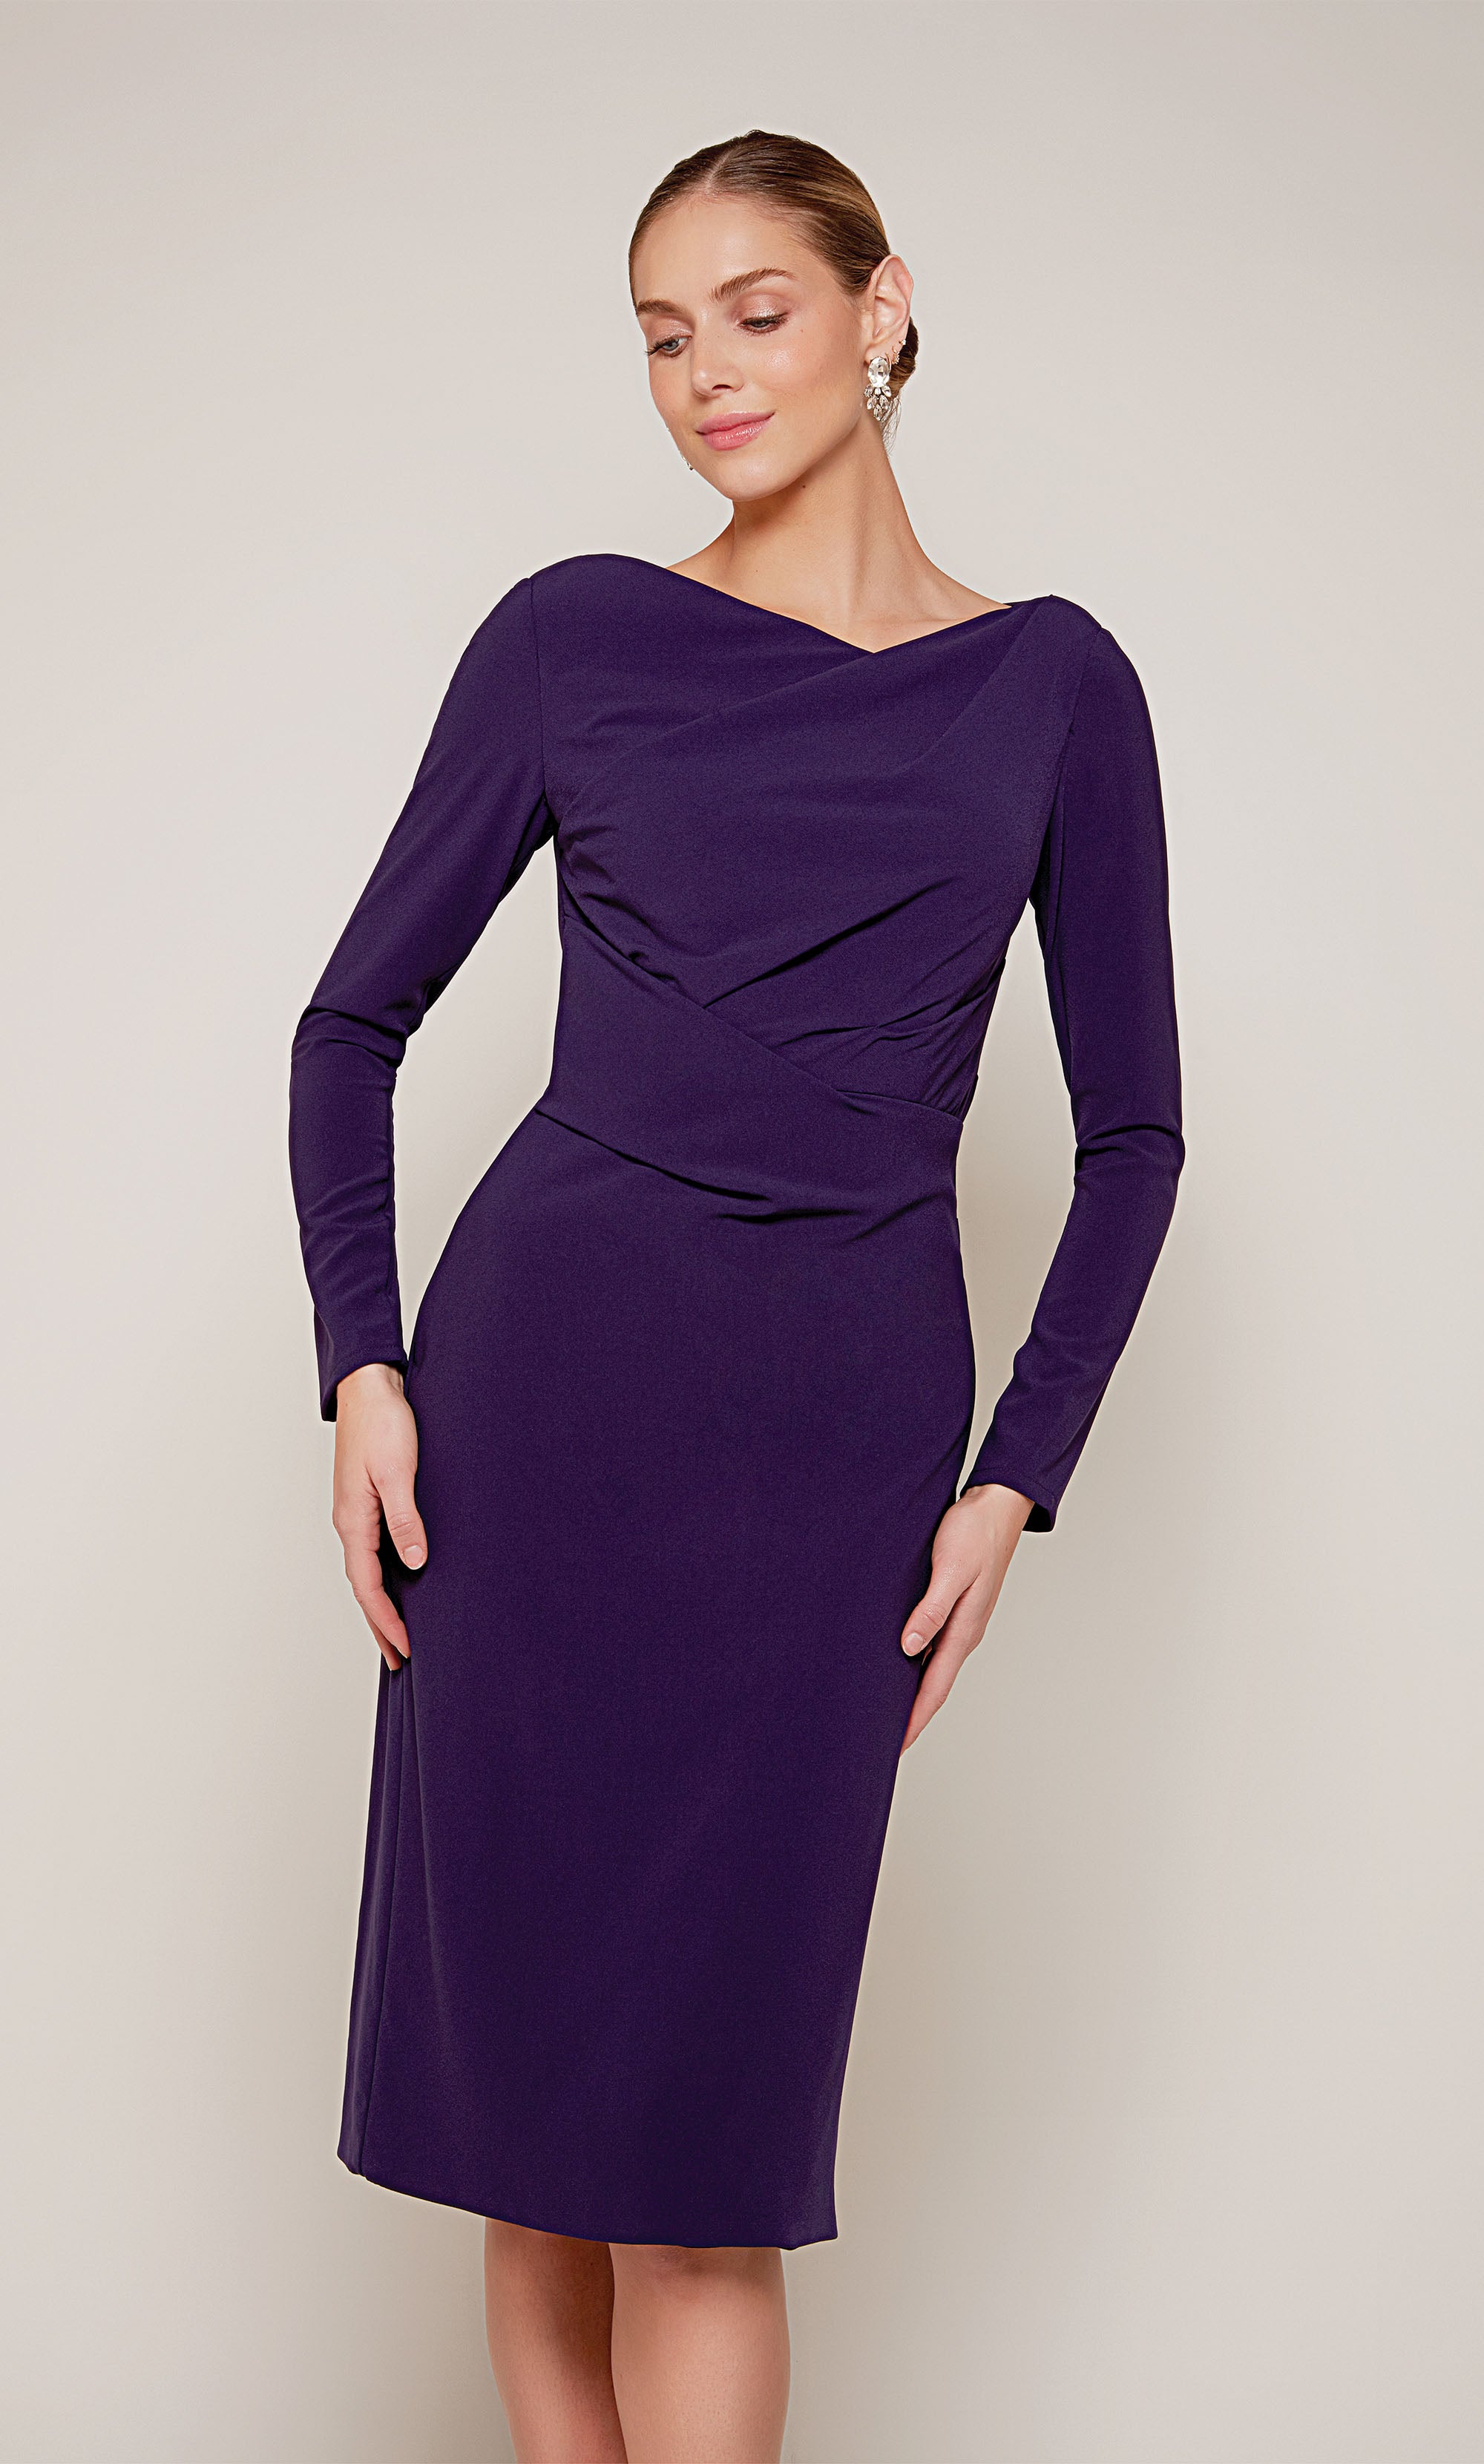 Buy Dark Purple V-neck Dress Online - W for Woman